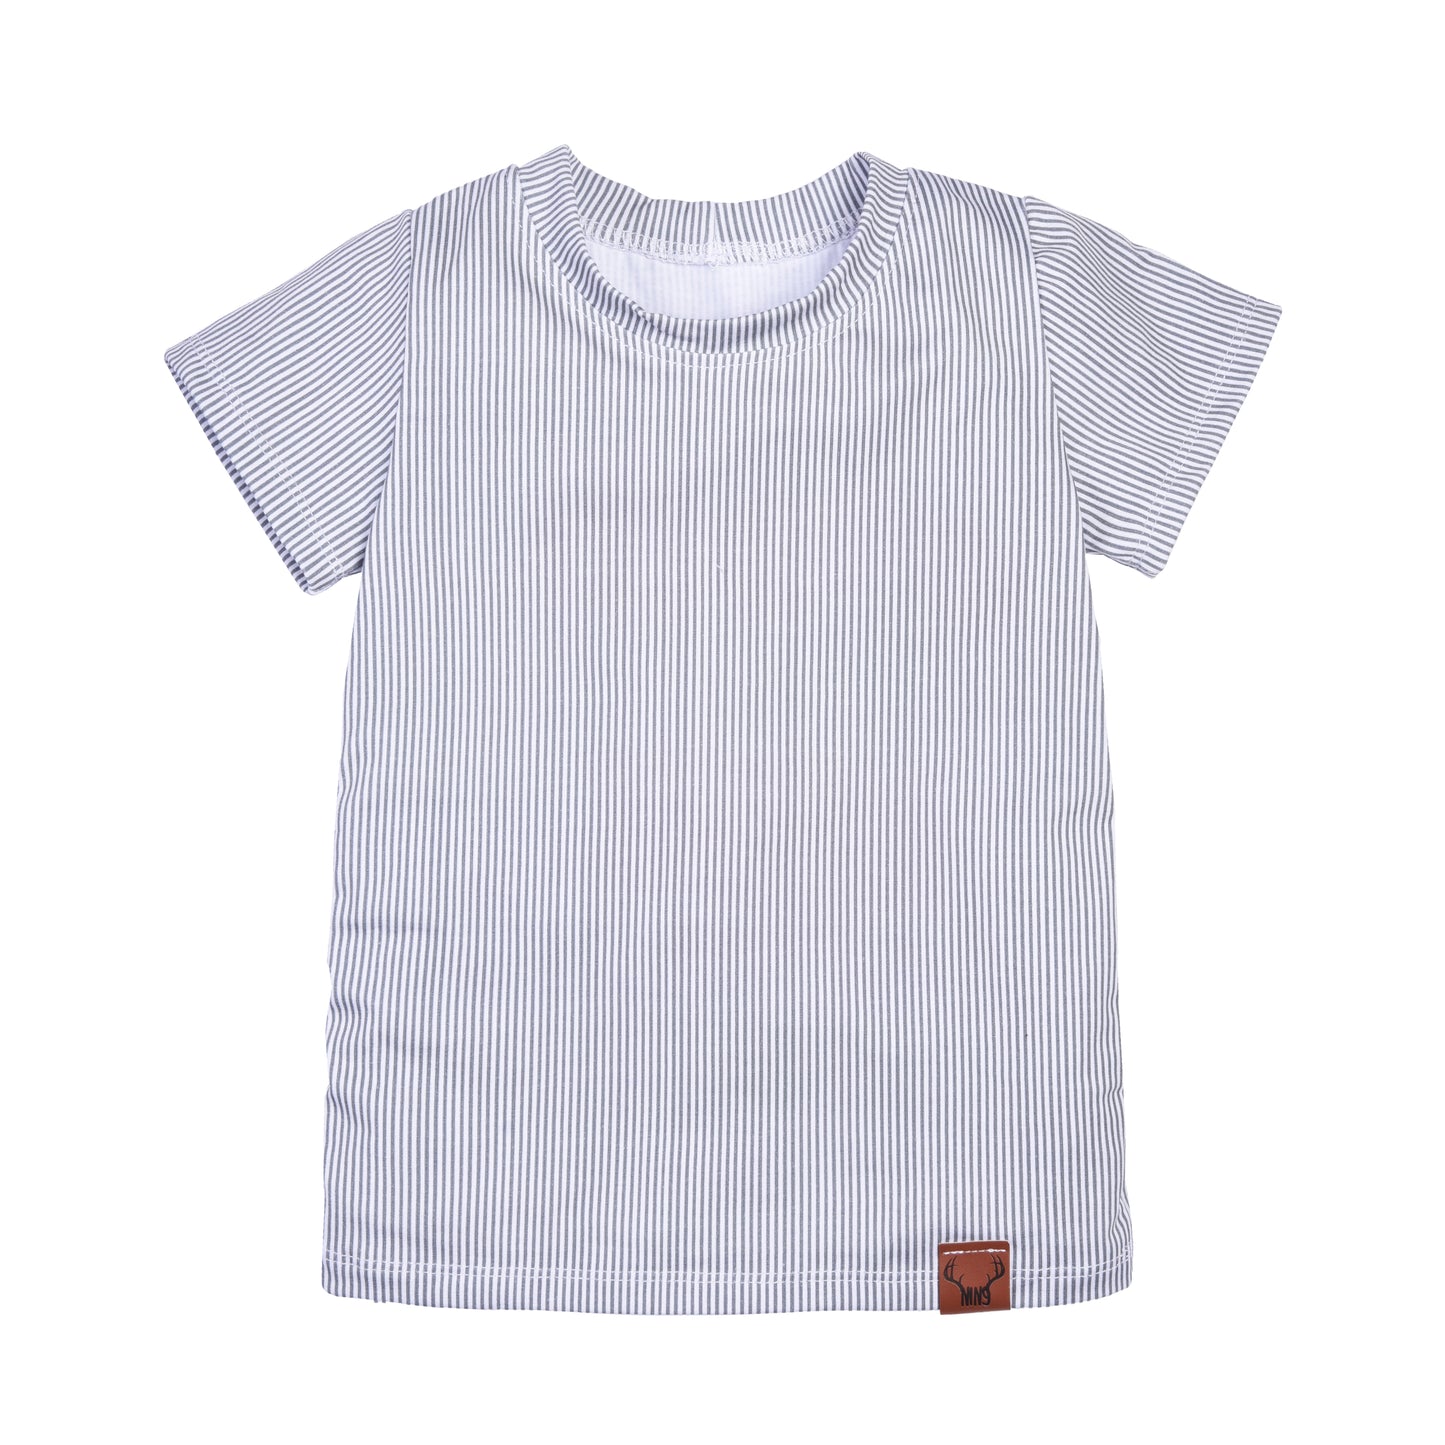 T-shirt rayé gris et blanc enfant Nine Clothing t-shirt kids white and gray stripes 